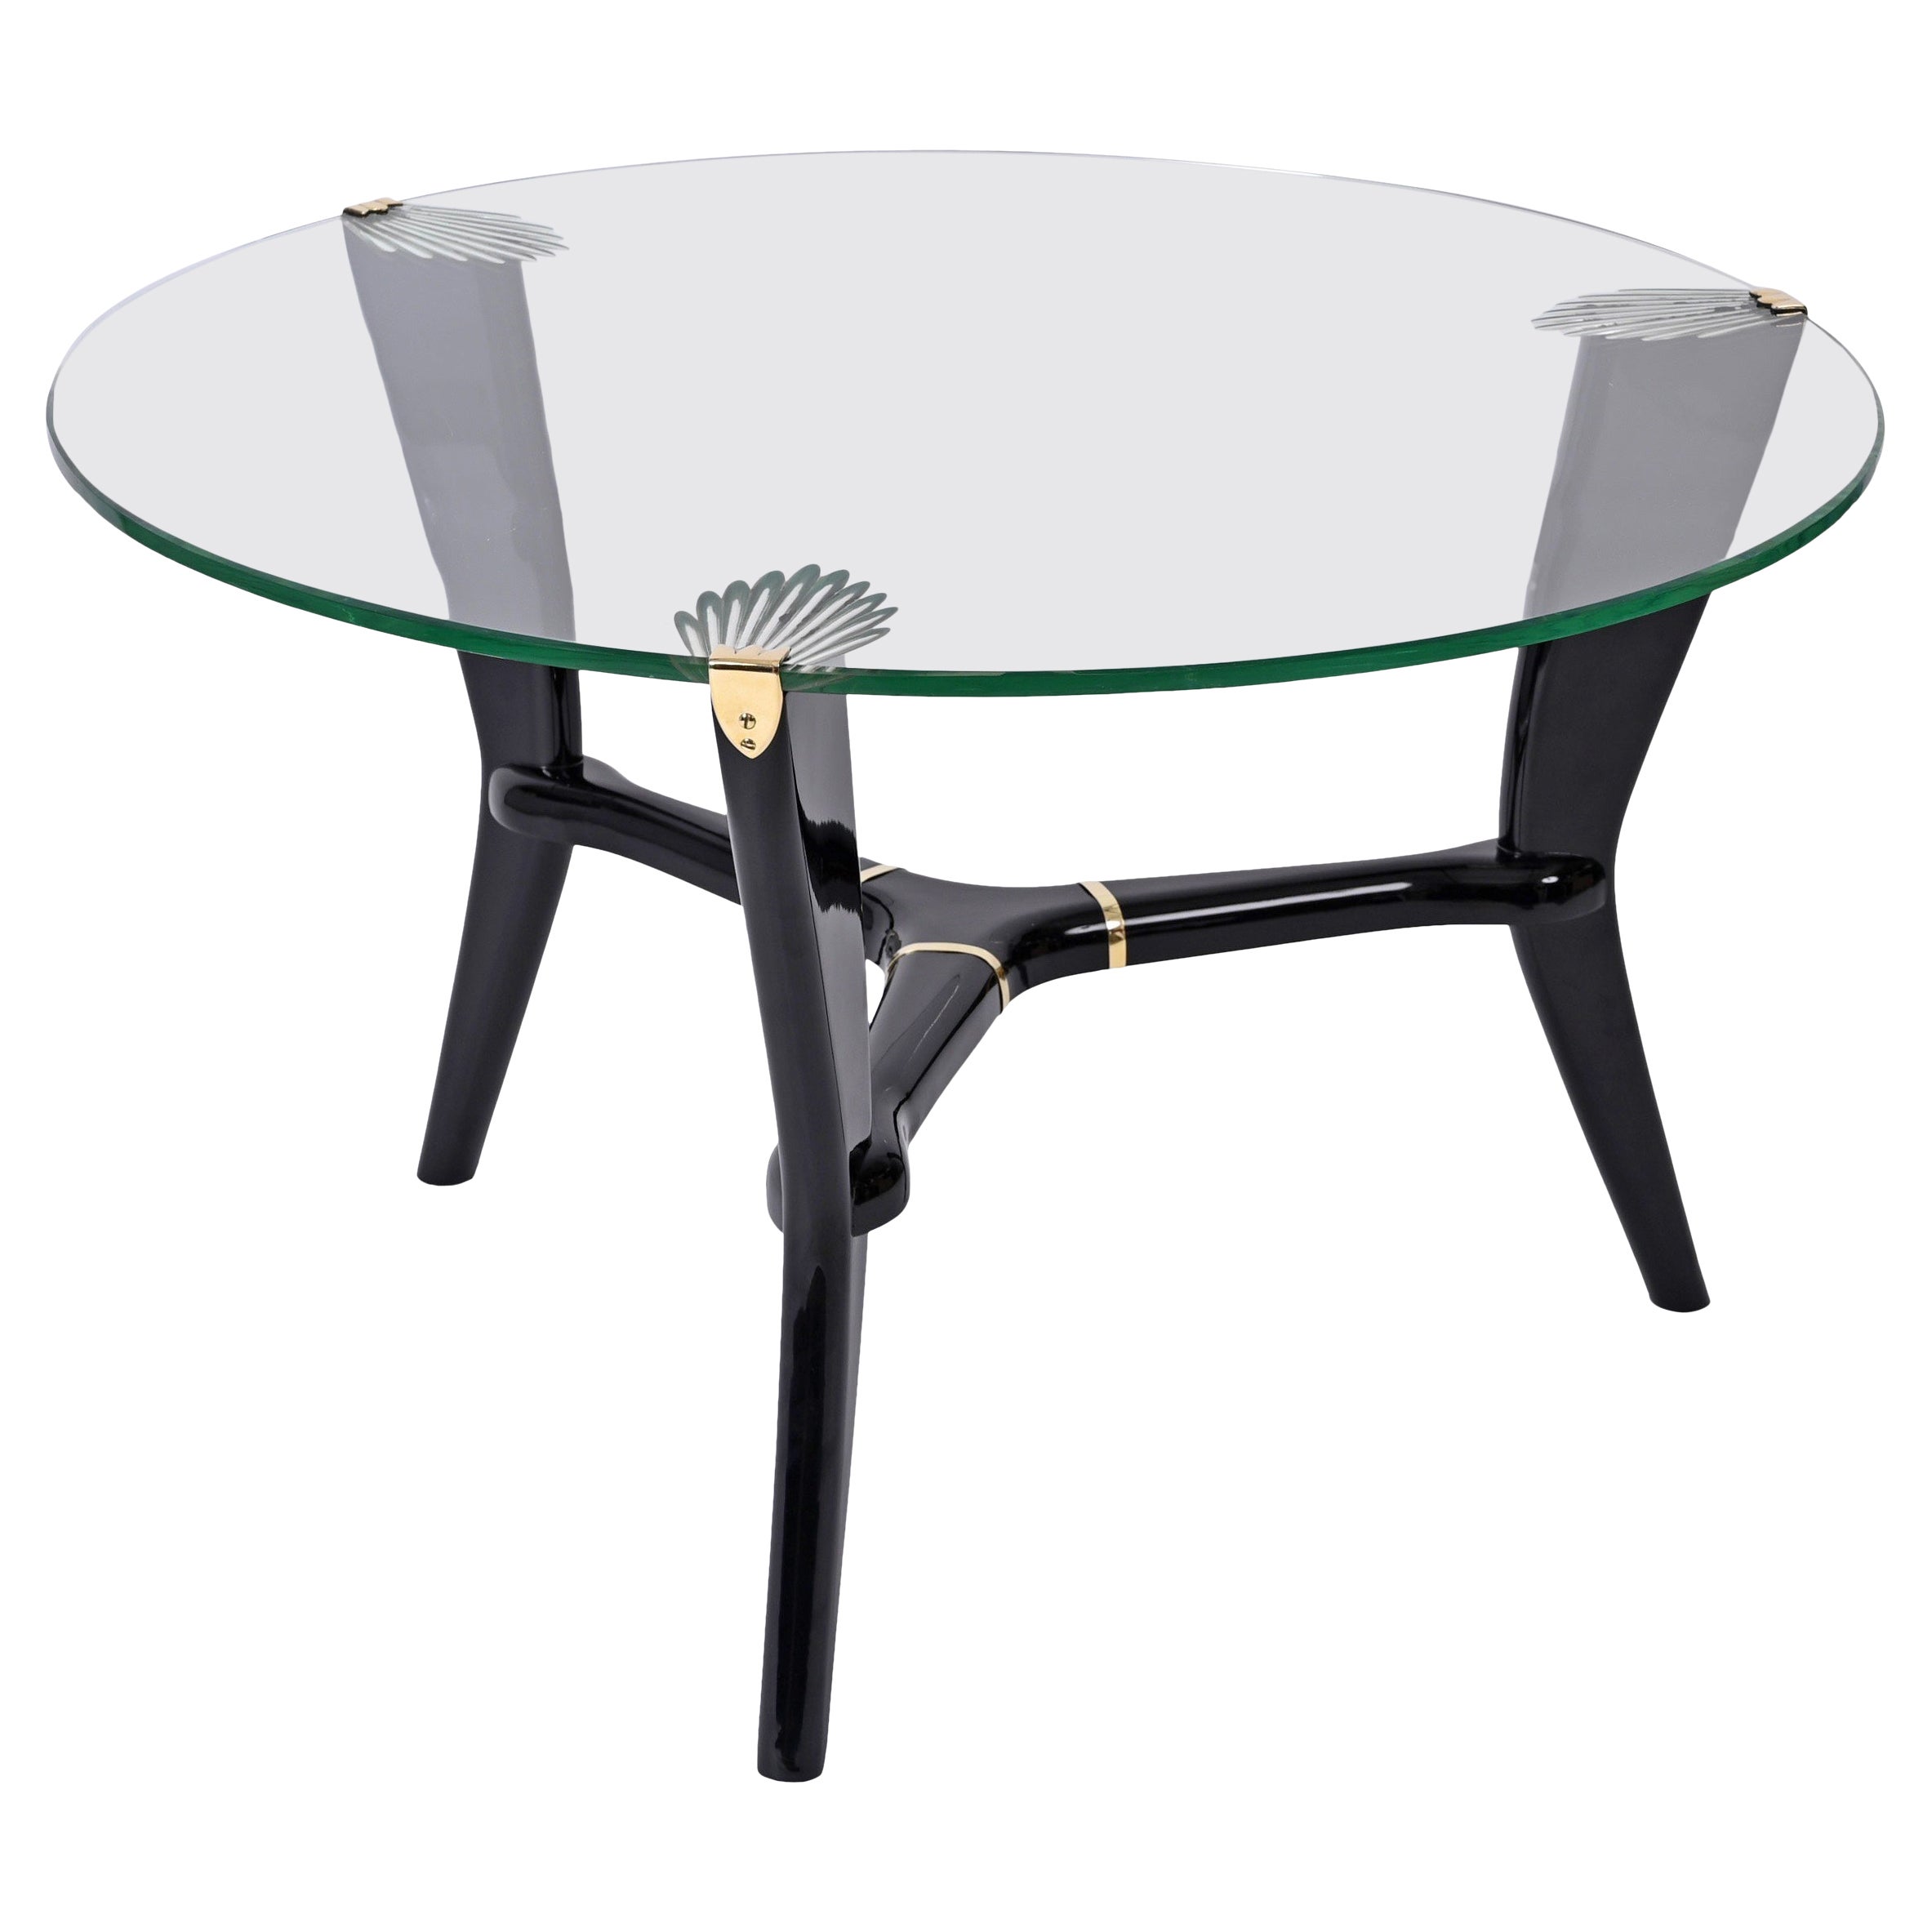 Deco Ebonized Wood and Glass Round Italian Coffee Table, Gio Ponti Style 1940s